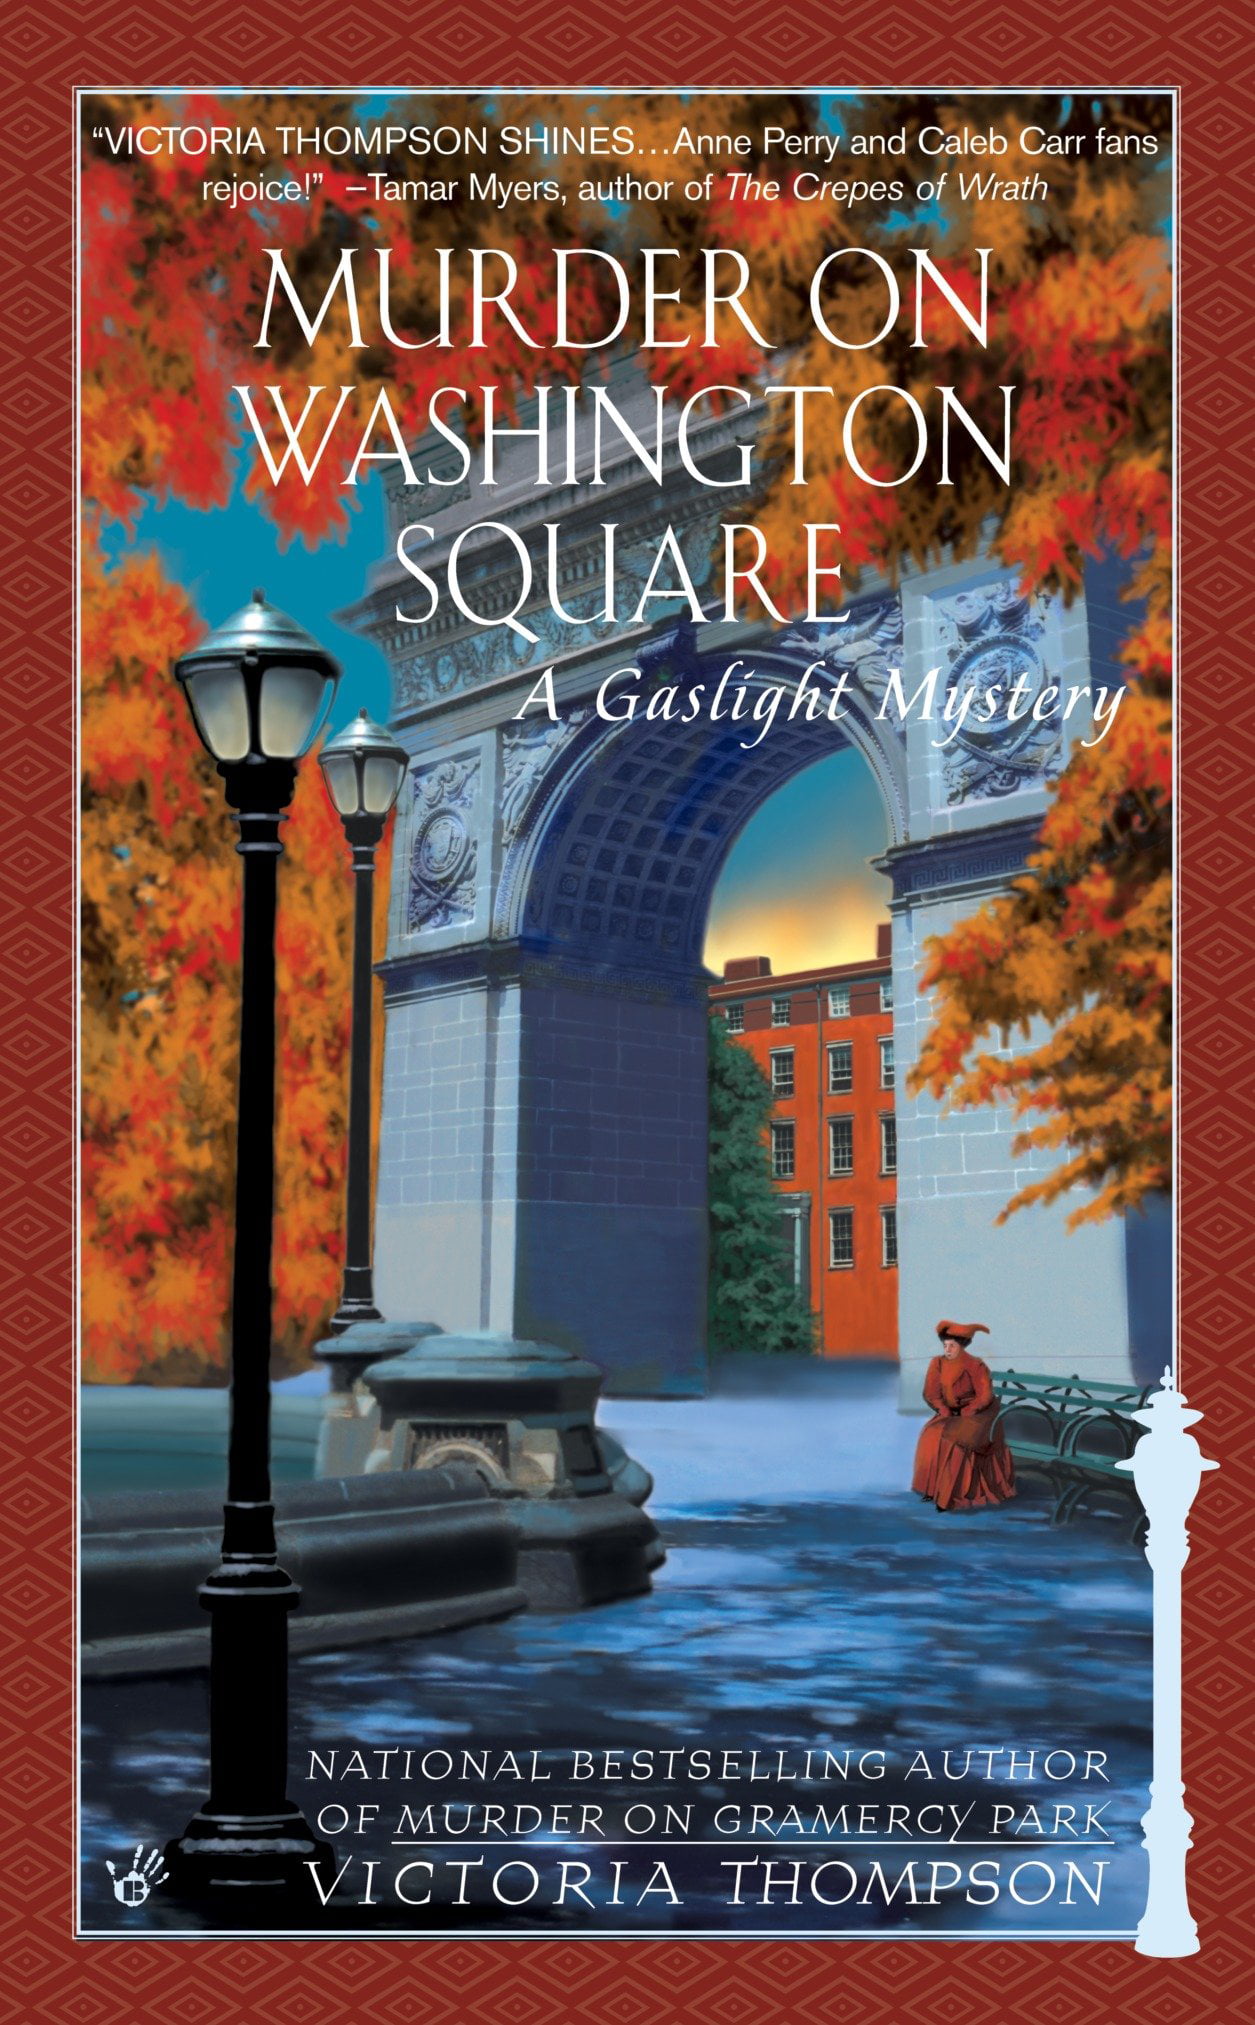 Gaslight Mystery: Murder on Washington Square (Series #4) (Paperback) - Walmart.com - Walmart.com